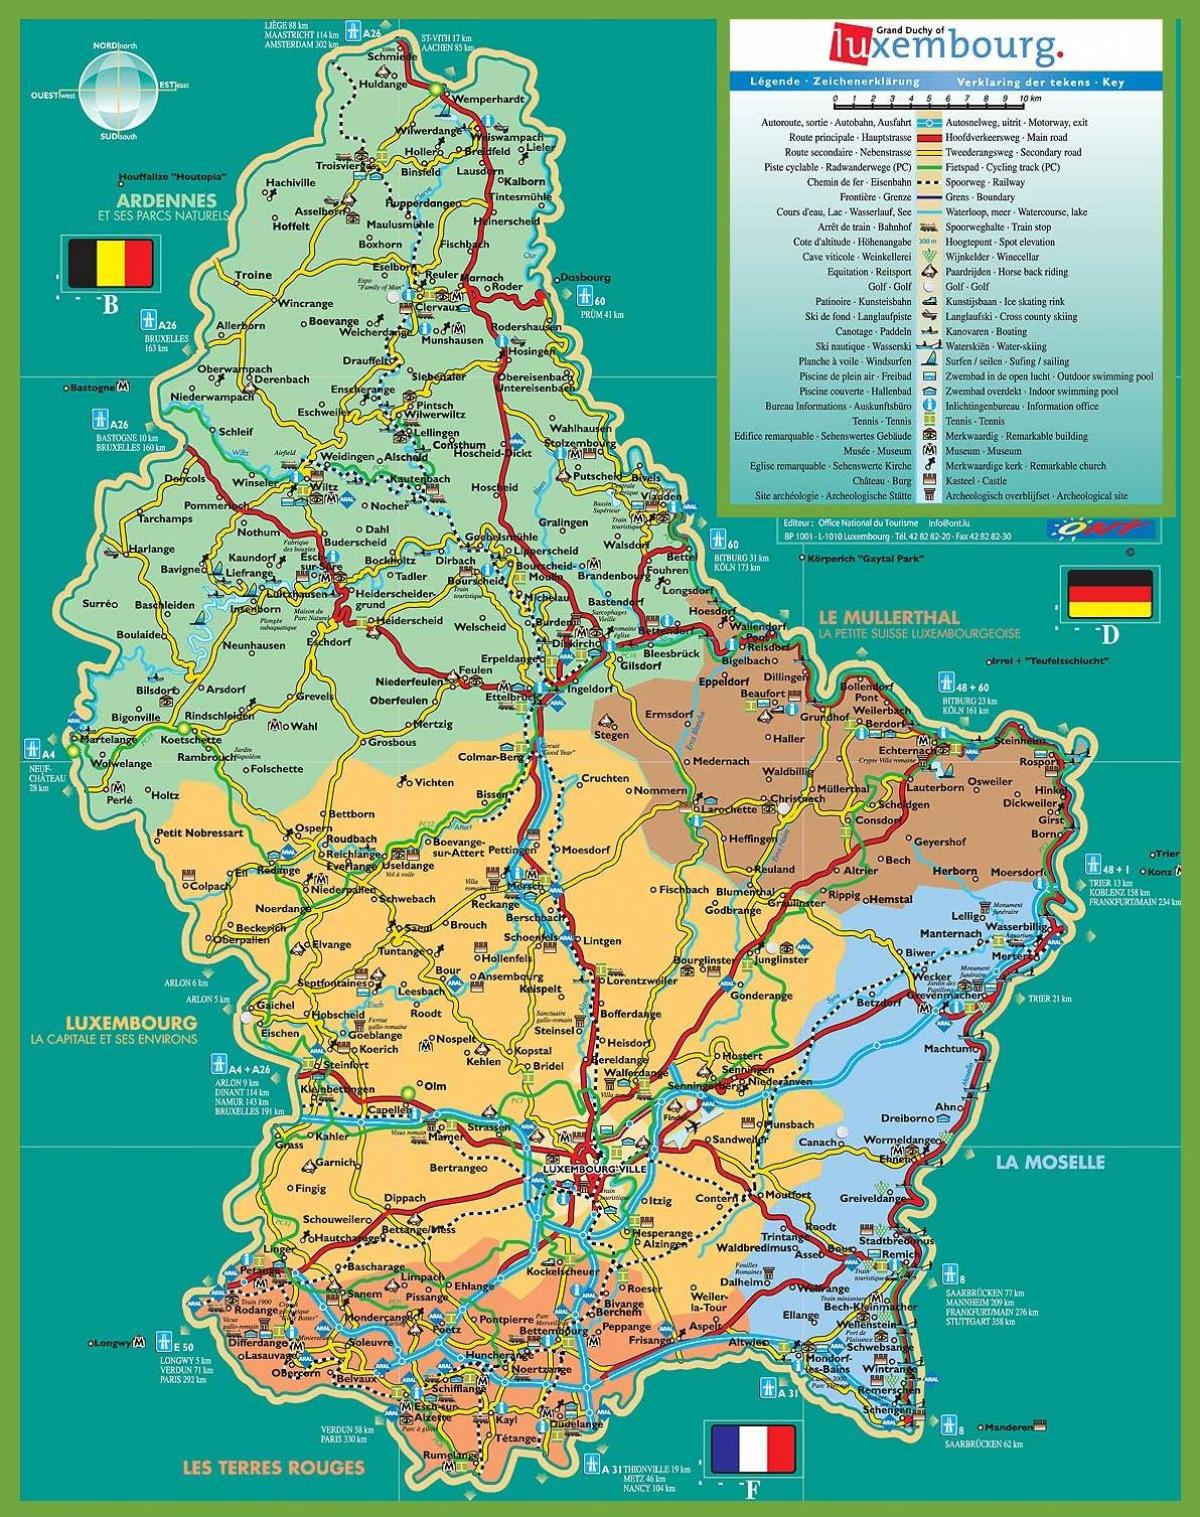 Luxembourg attractions de la carte